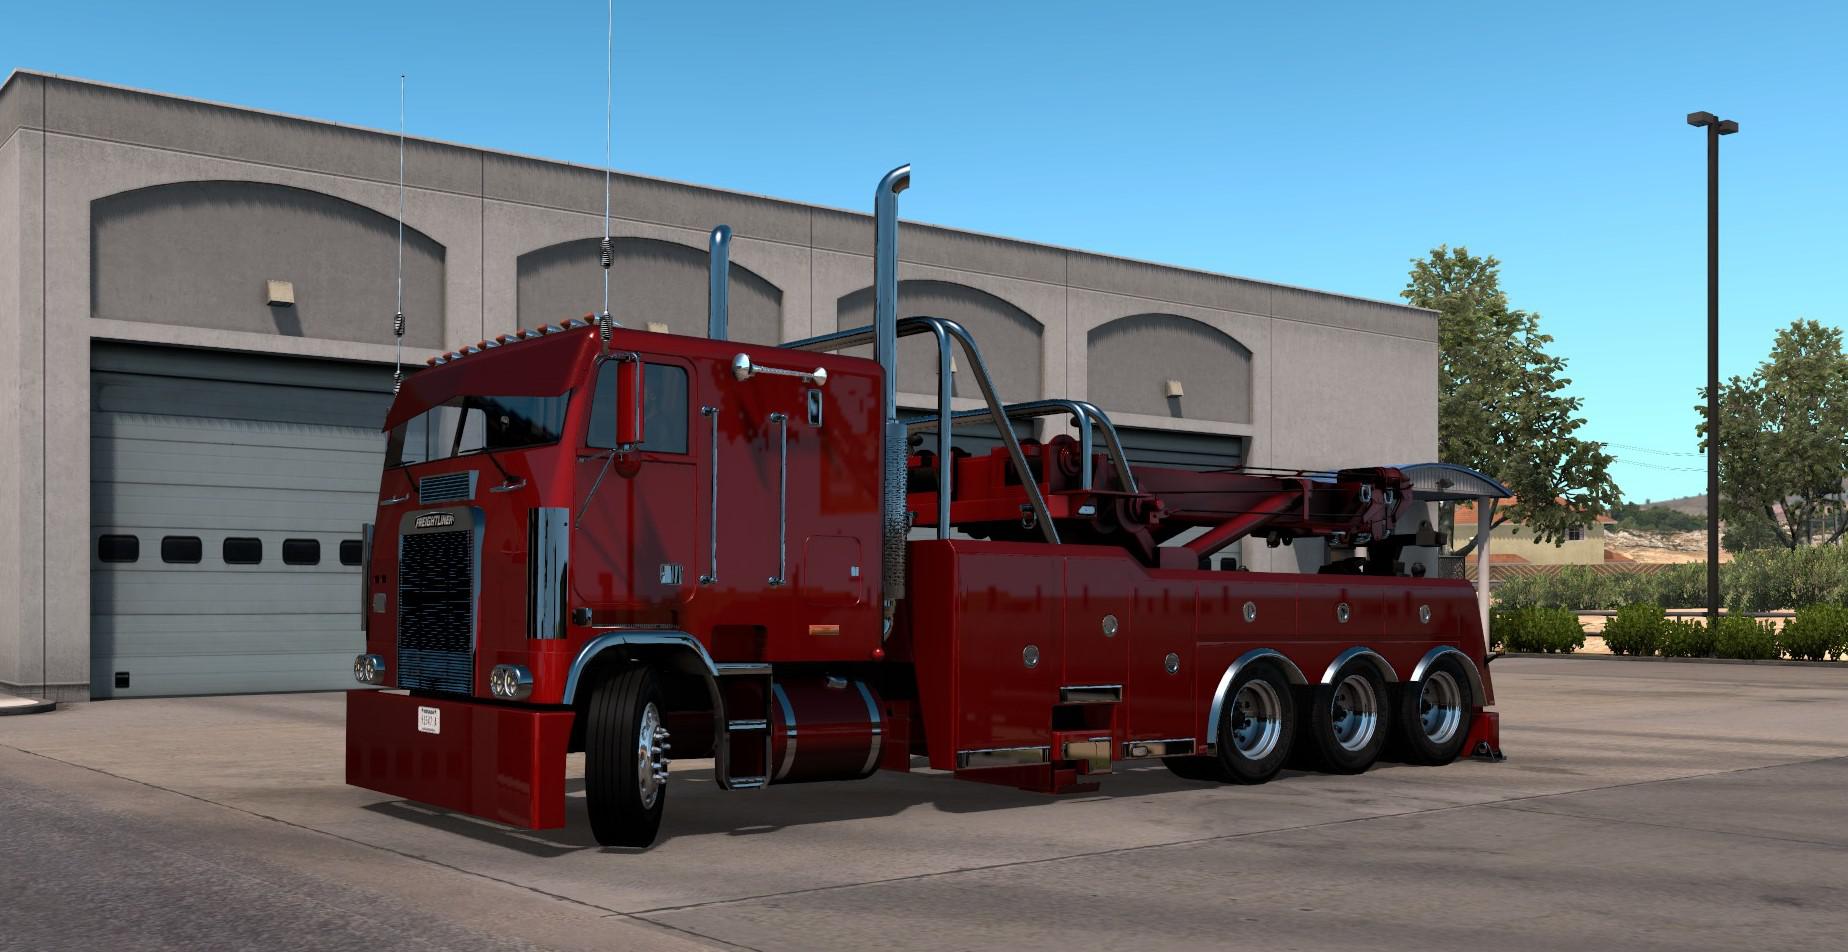 Ats Freightliner Flb Custom Truck 138x American Truck Simulator Modsclub